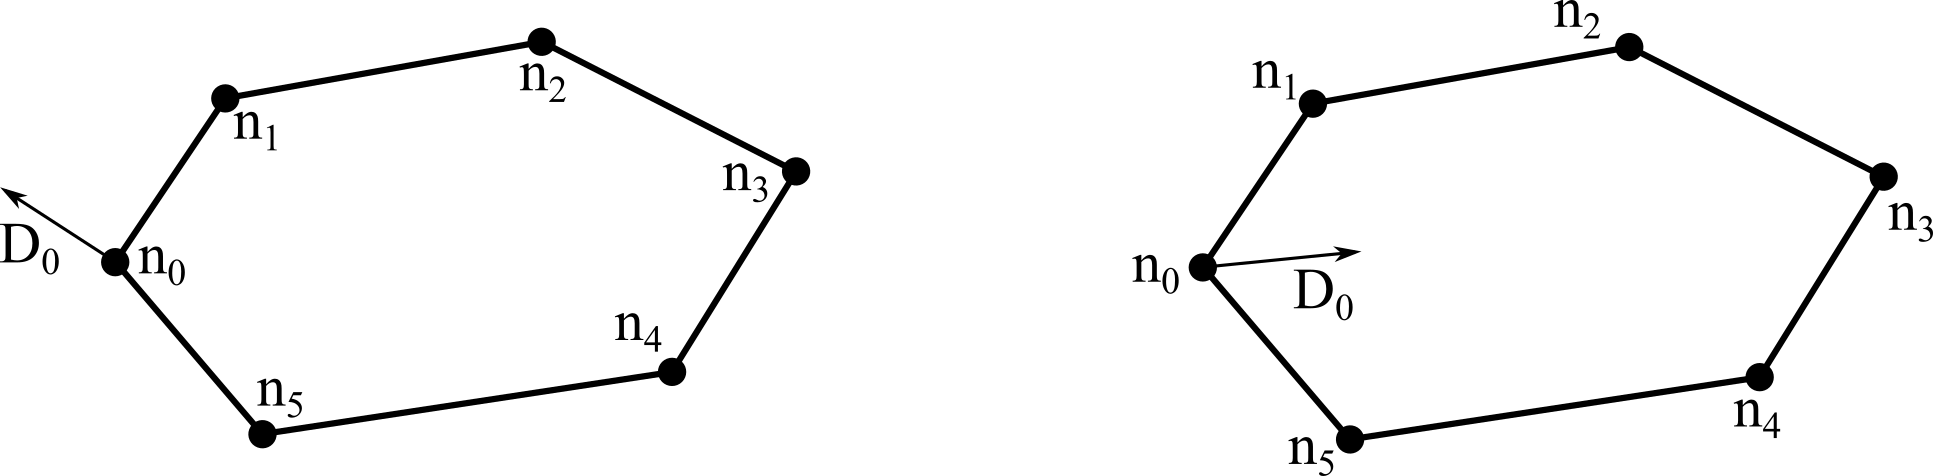 Схема вектора ориентации контура